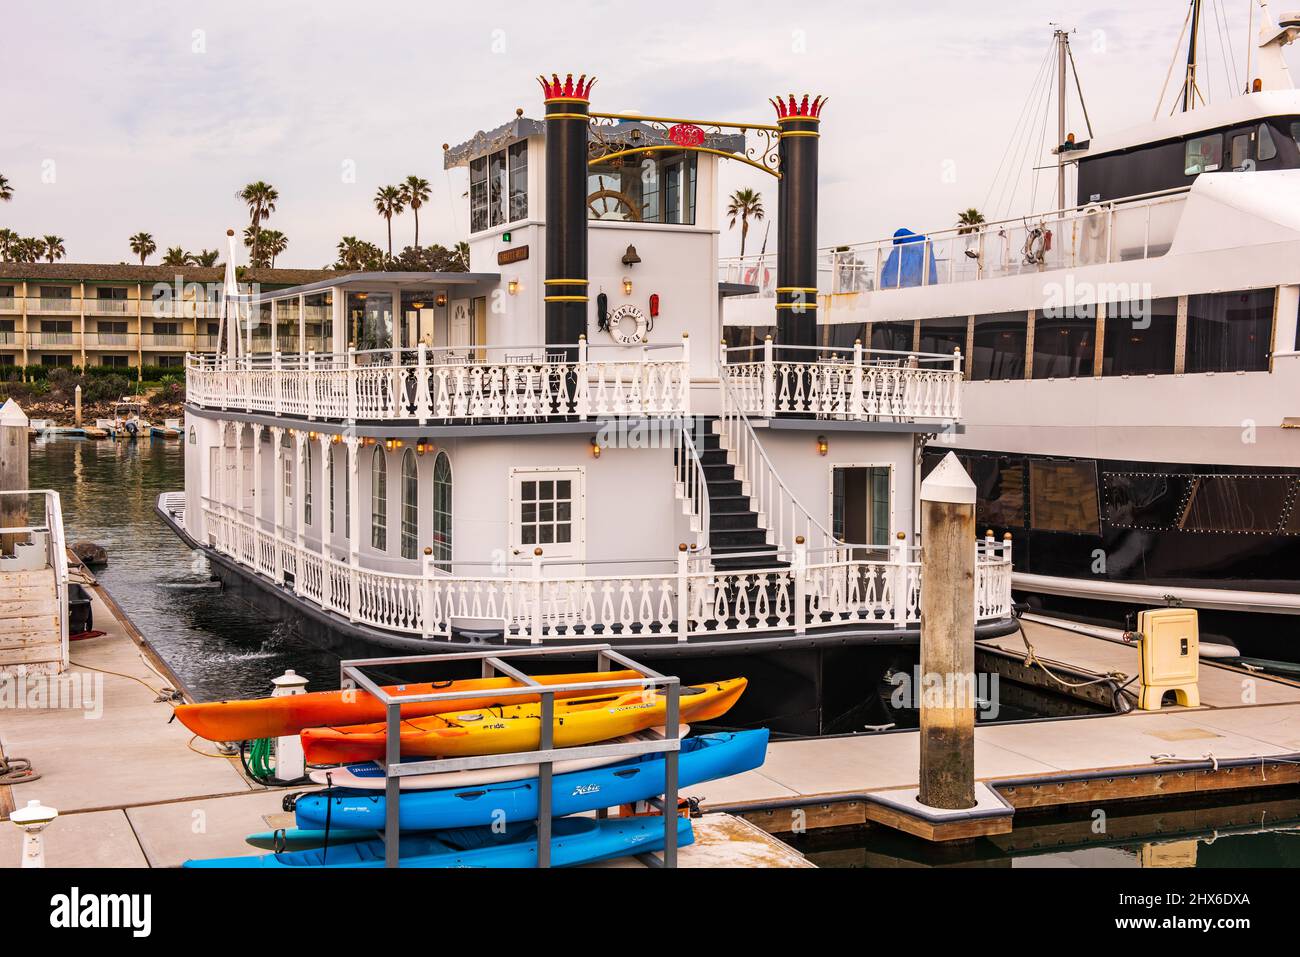 Oxnard, CA /USA - 6 avril 2016: Scarlette Belle Riverboat of Channel Islands Harbour Cruises à Oxnard, Californie. Banque D'Images